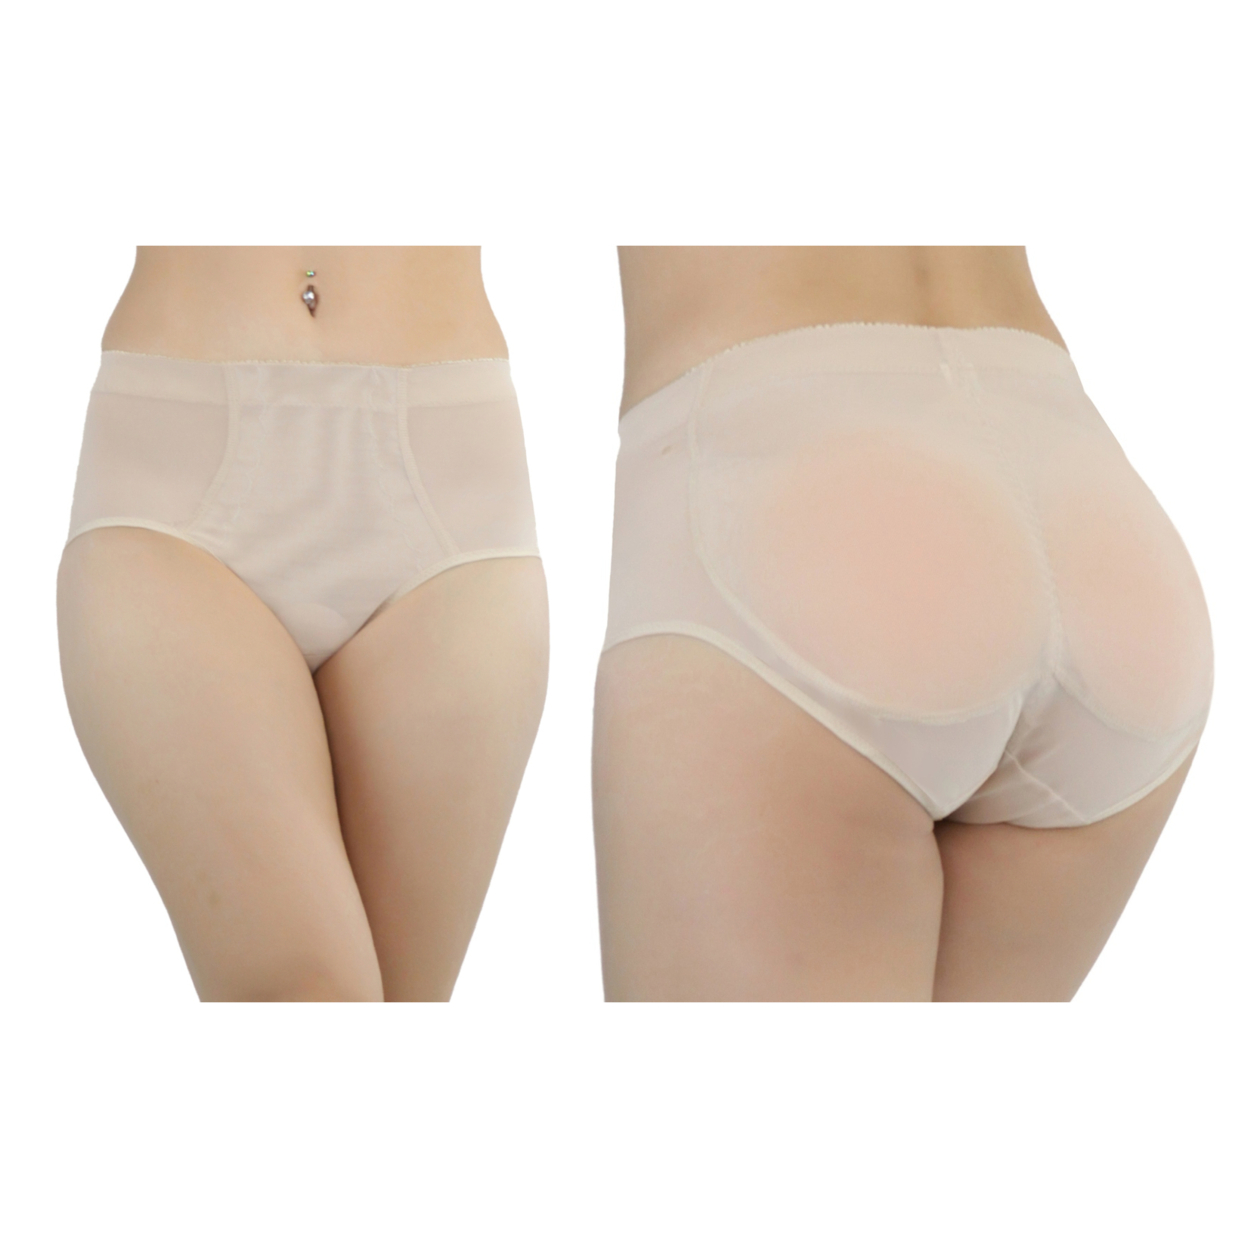 Women's Silicone Instant Buttocks Enhancer Panties - Black, S